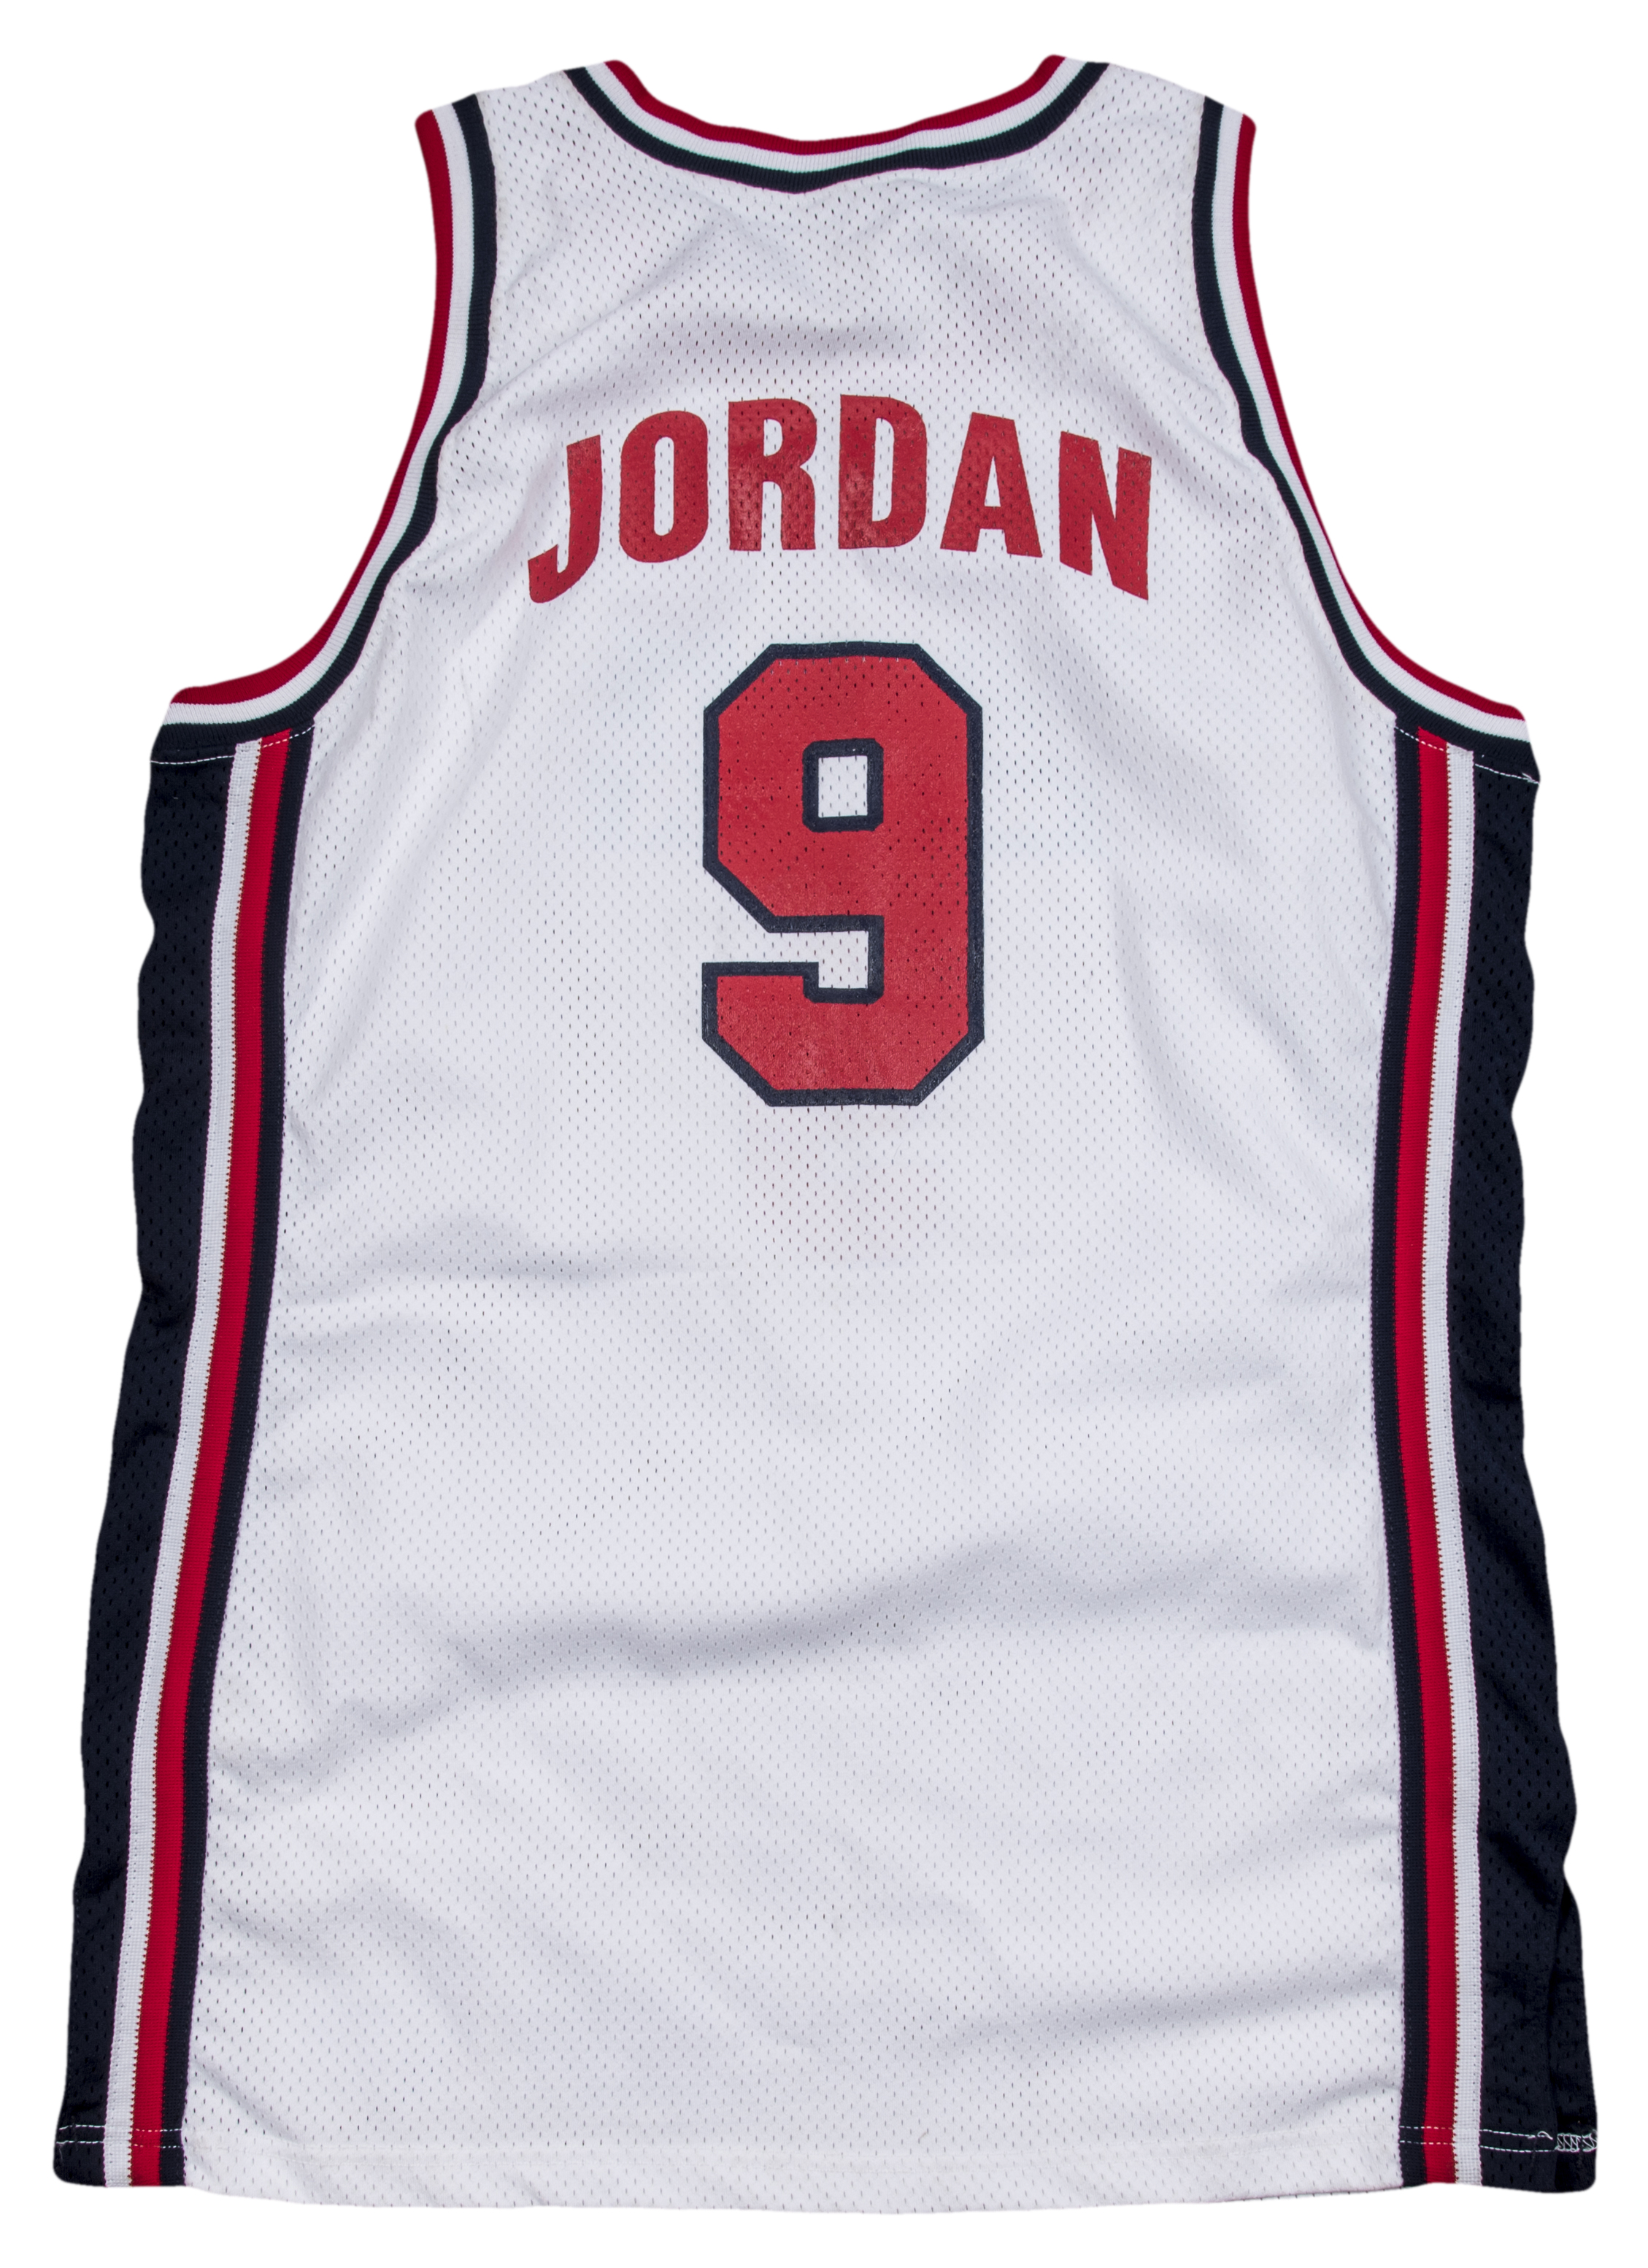 1992 dream team jordan jersey